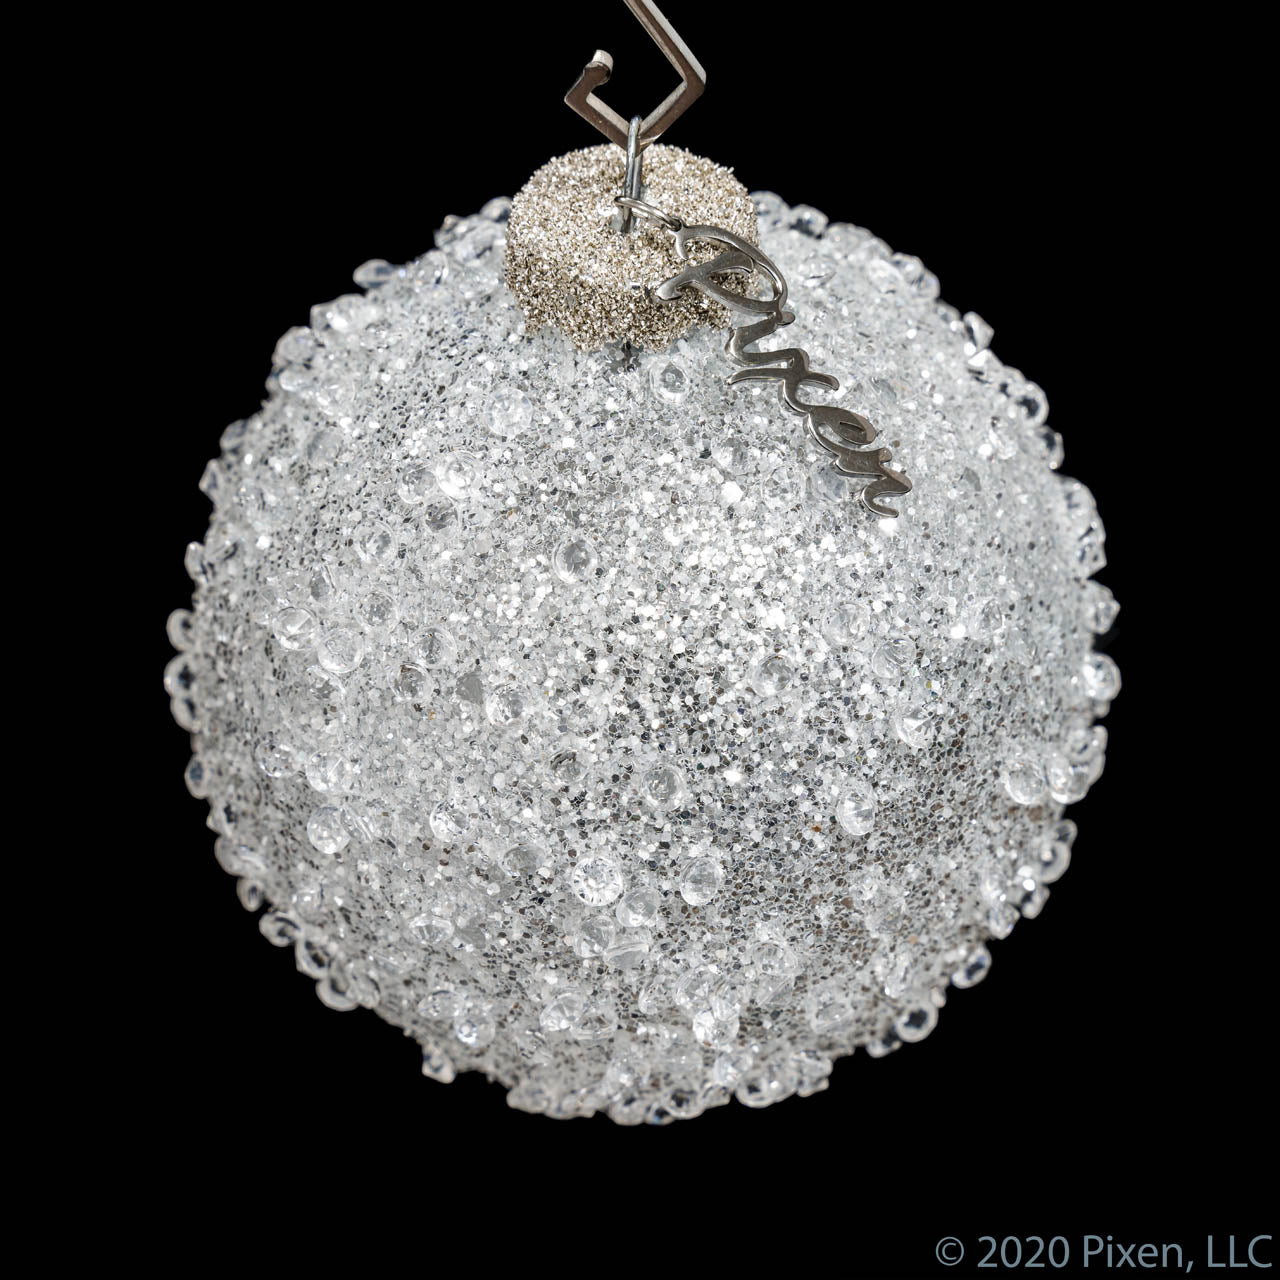 Glass Christmas Ornament Daphnis by Pixen